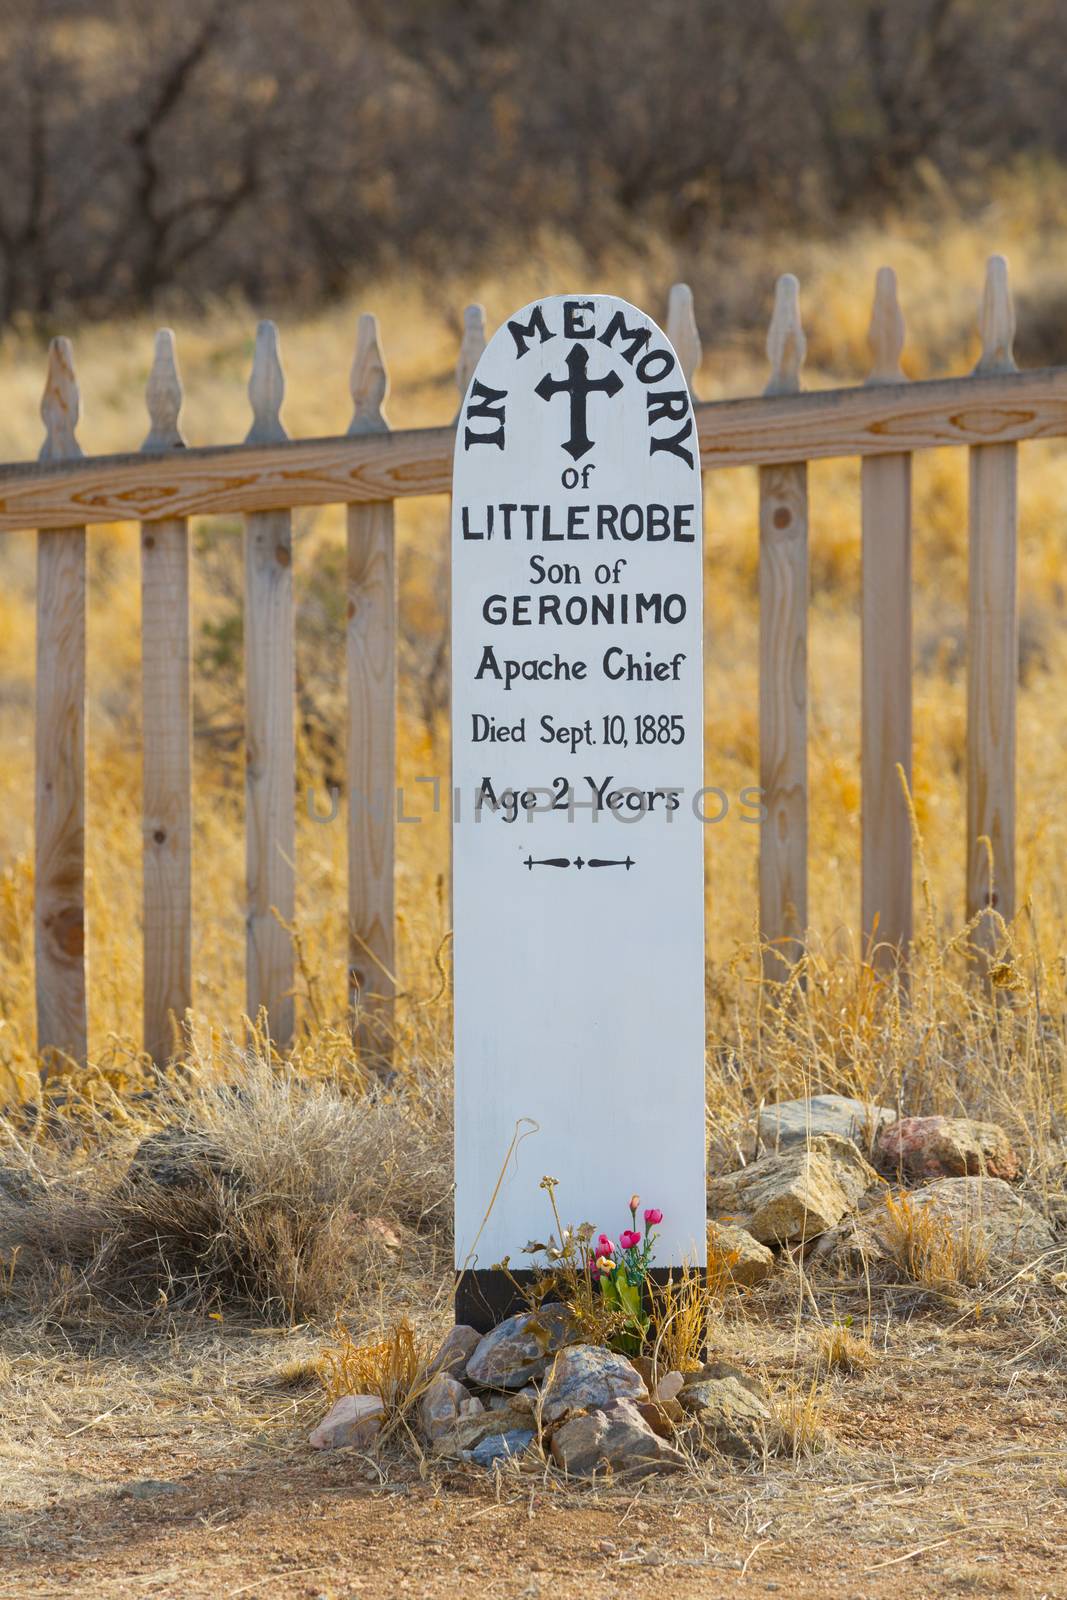 Grave marker for Littlerobe, son of Geronimo in Arizona